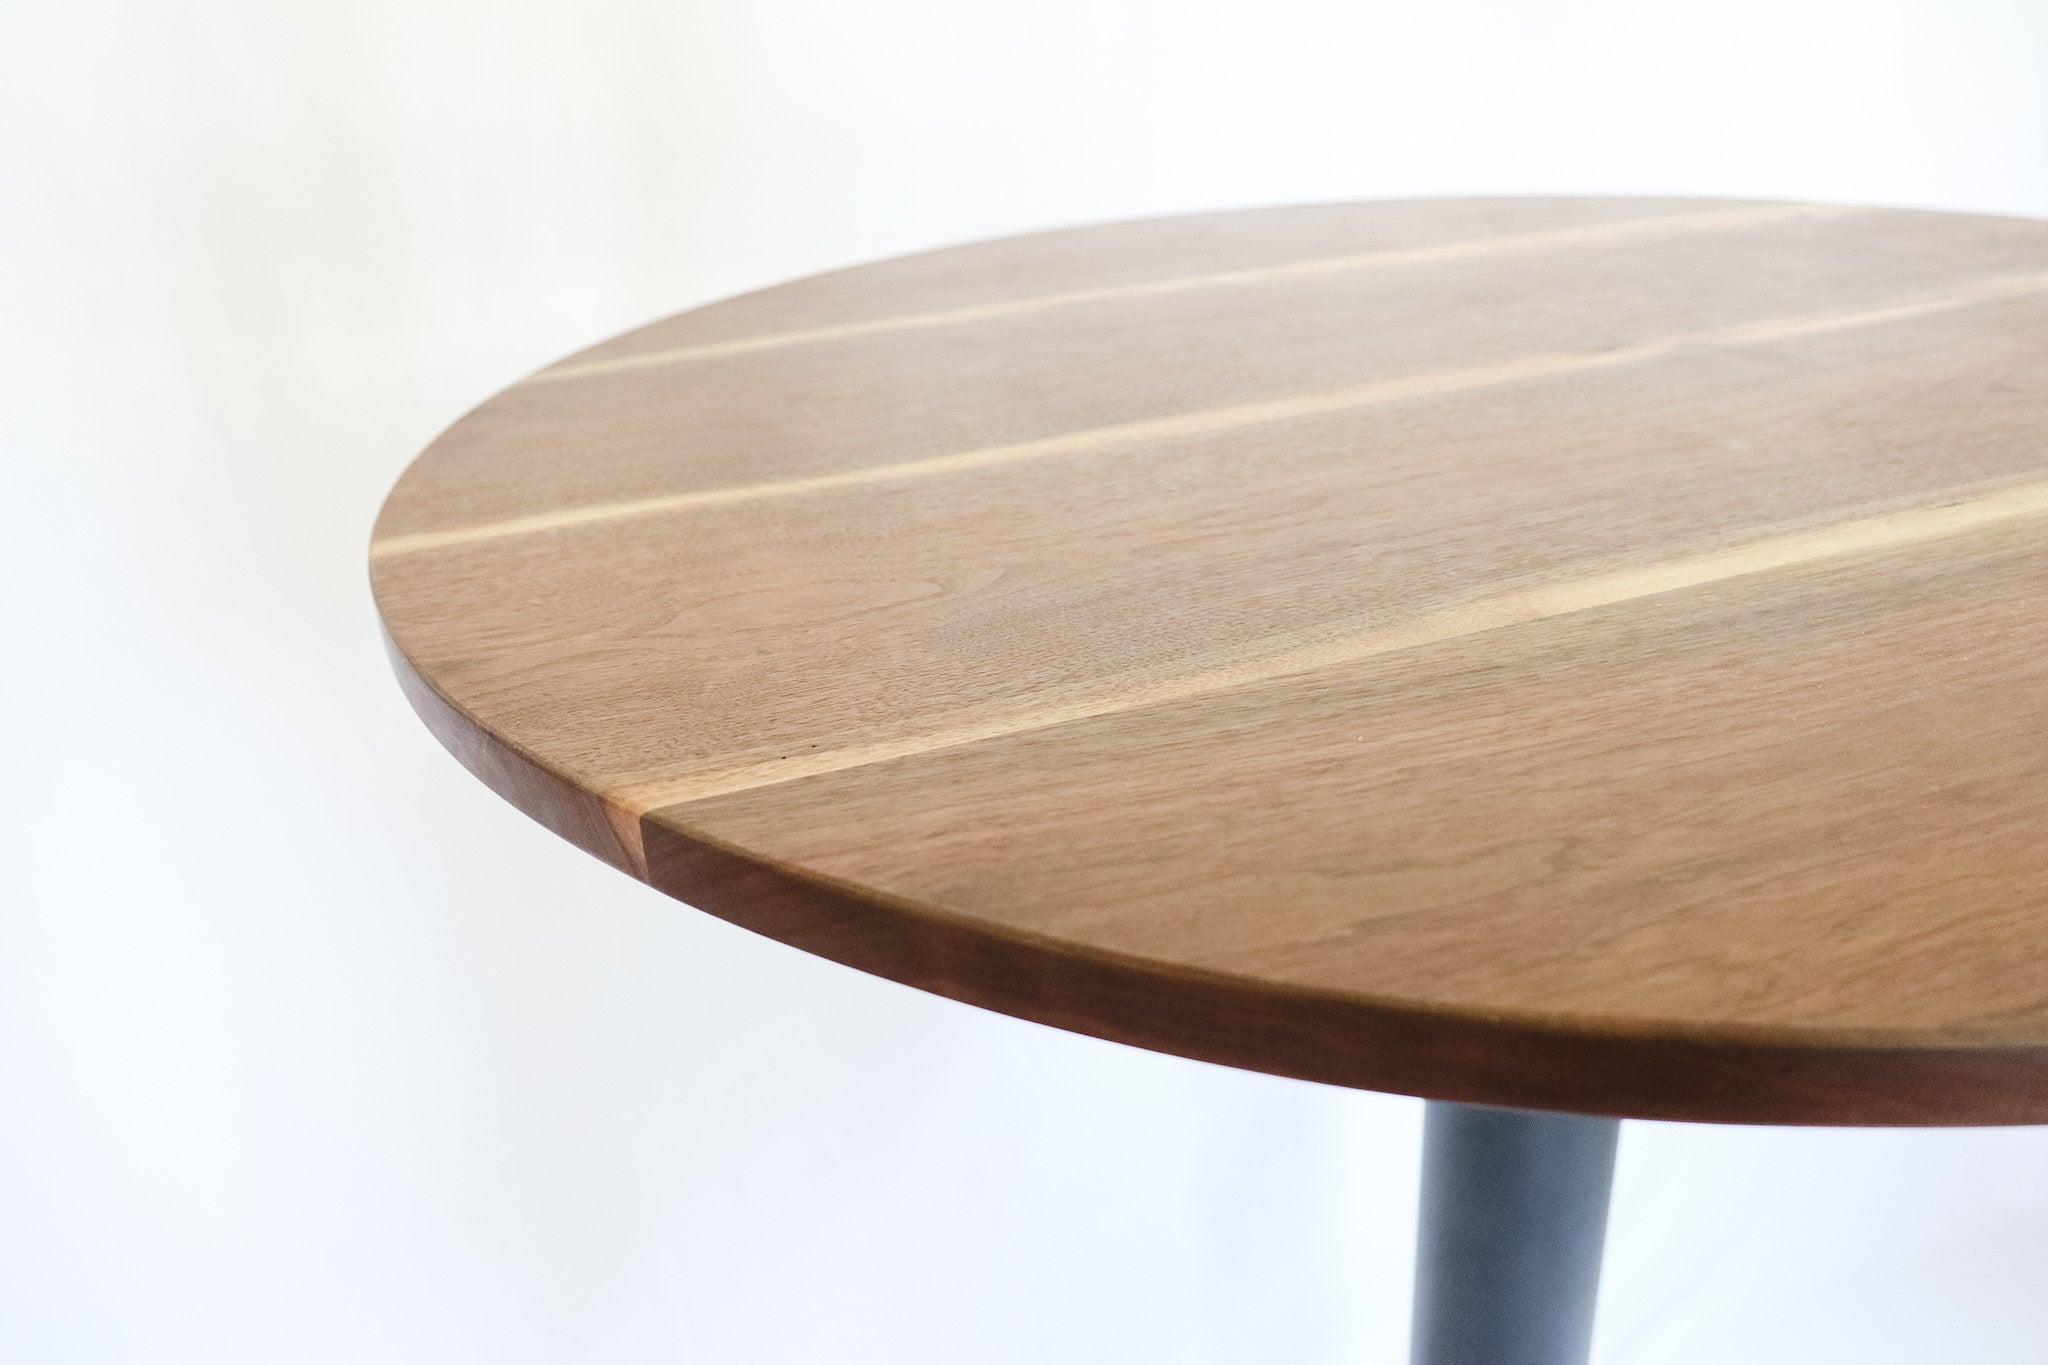 Modern Round Walnut Pub Table with Black Steel Legs   |   Bar or Standard Height